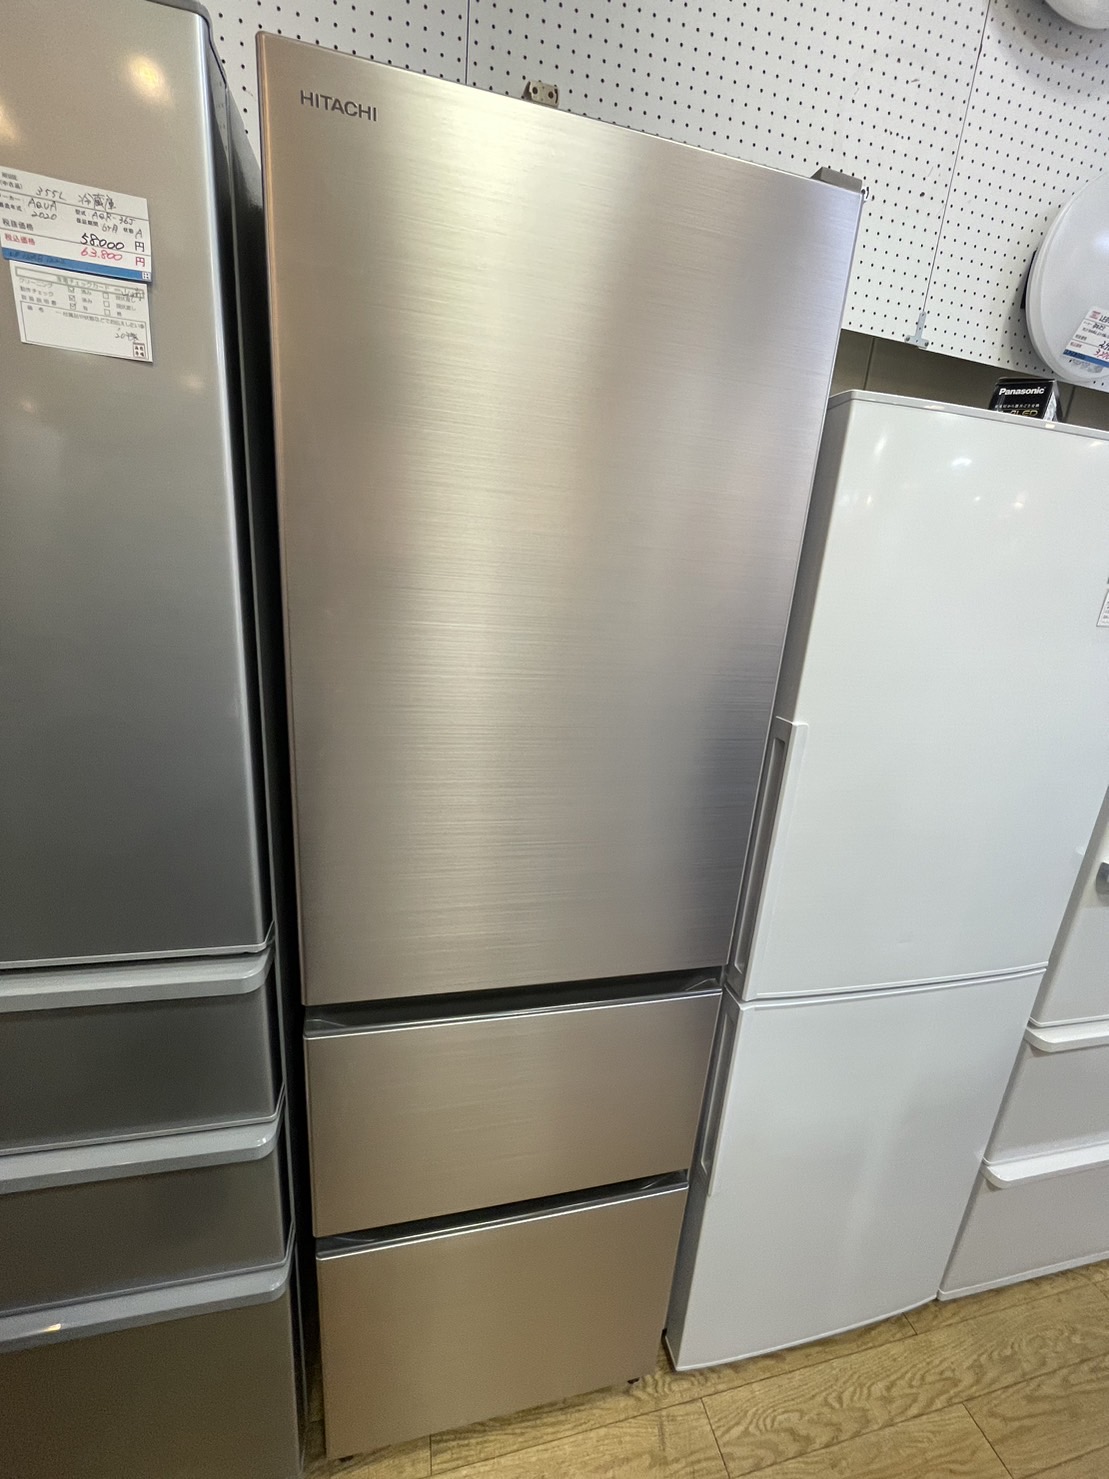 HITACHI ノンフロン冷凍冷蔵庫 直接引き取り希望 - 冷蔵庫・冷凍庫